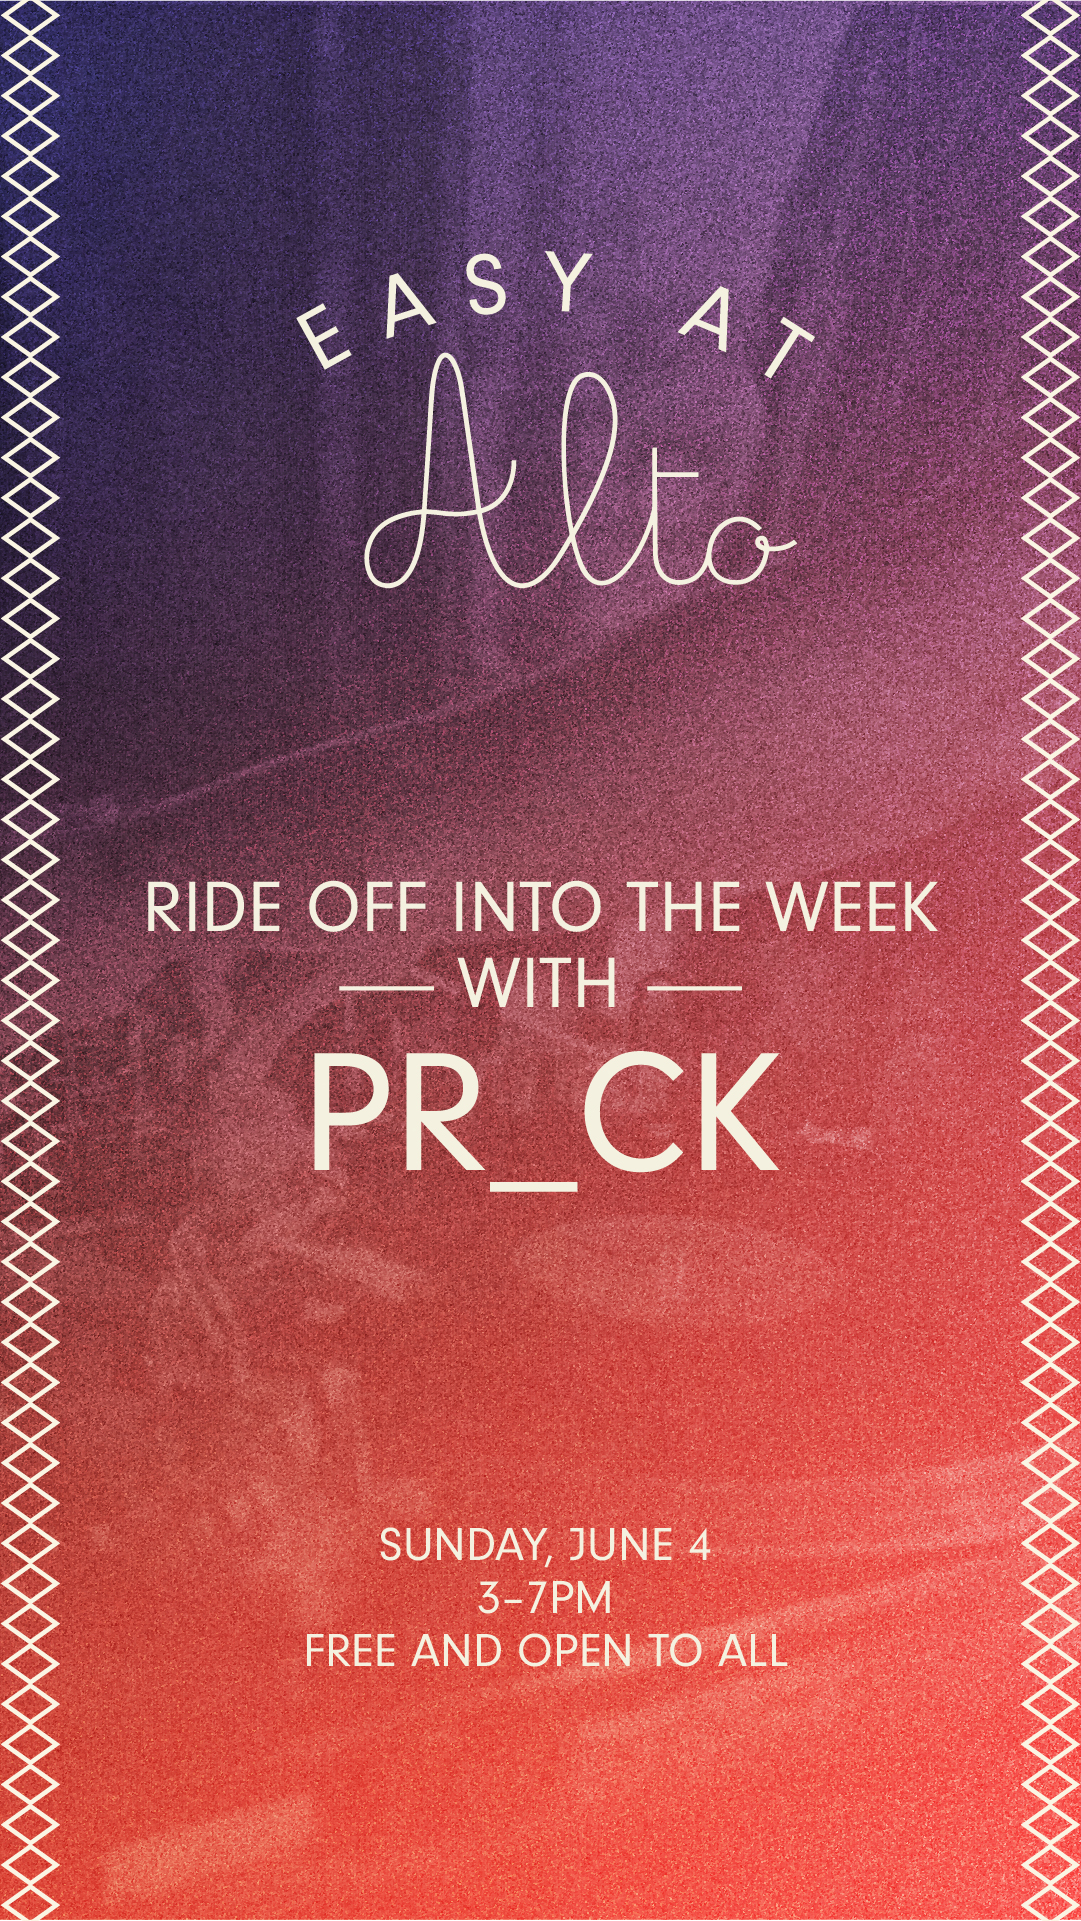 Easy At Alto with Pr_ck